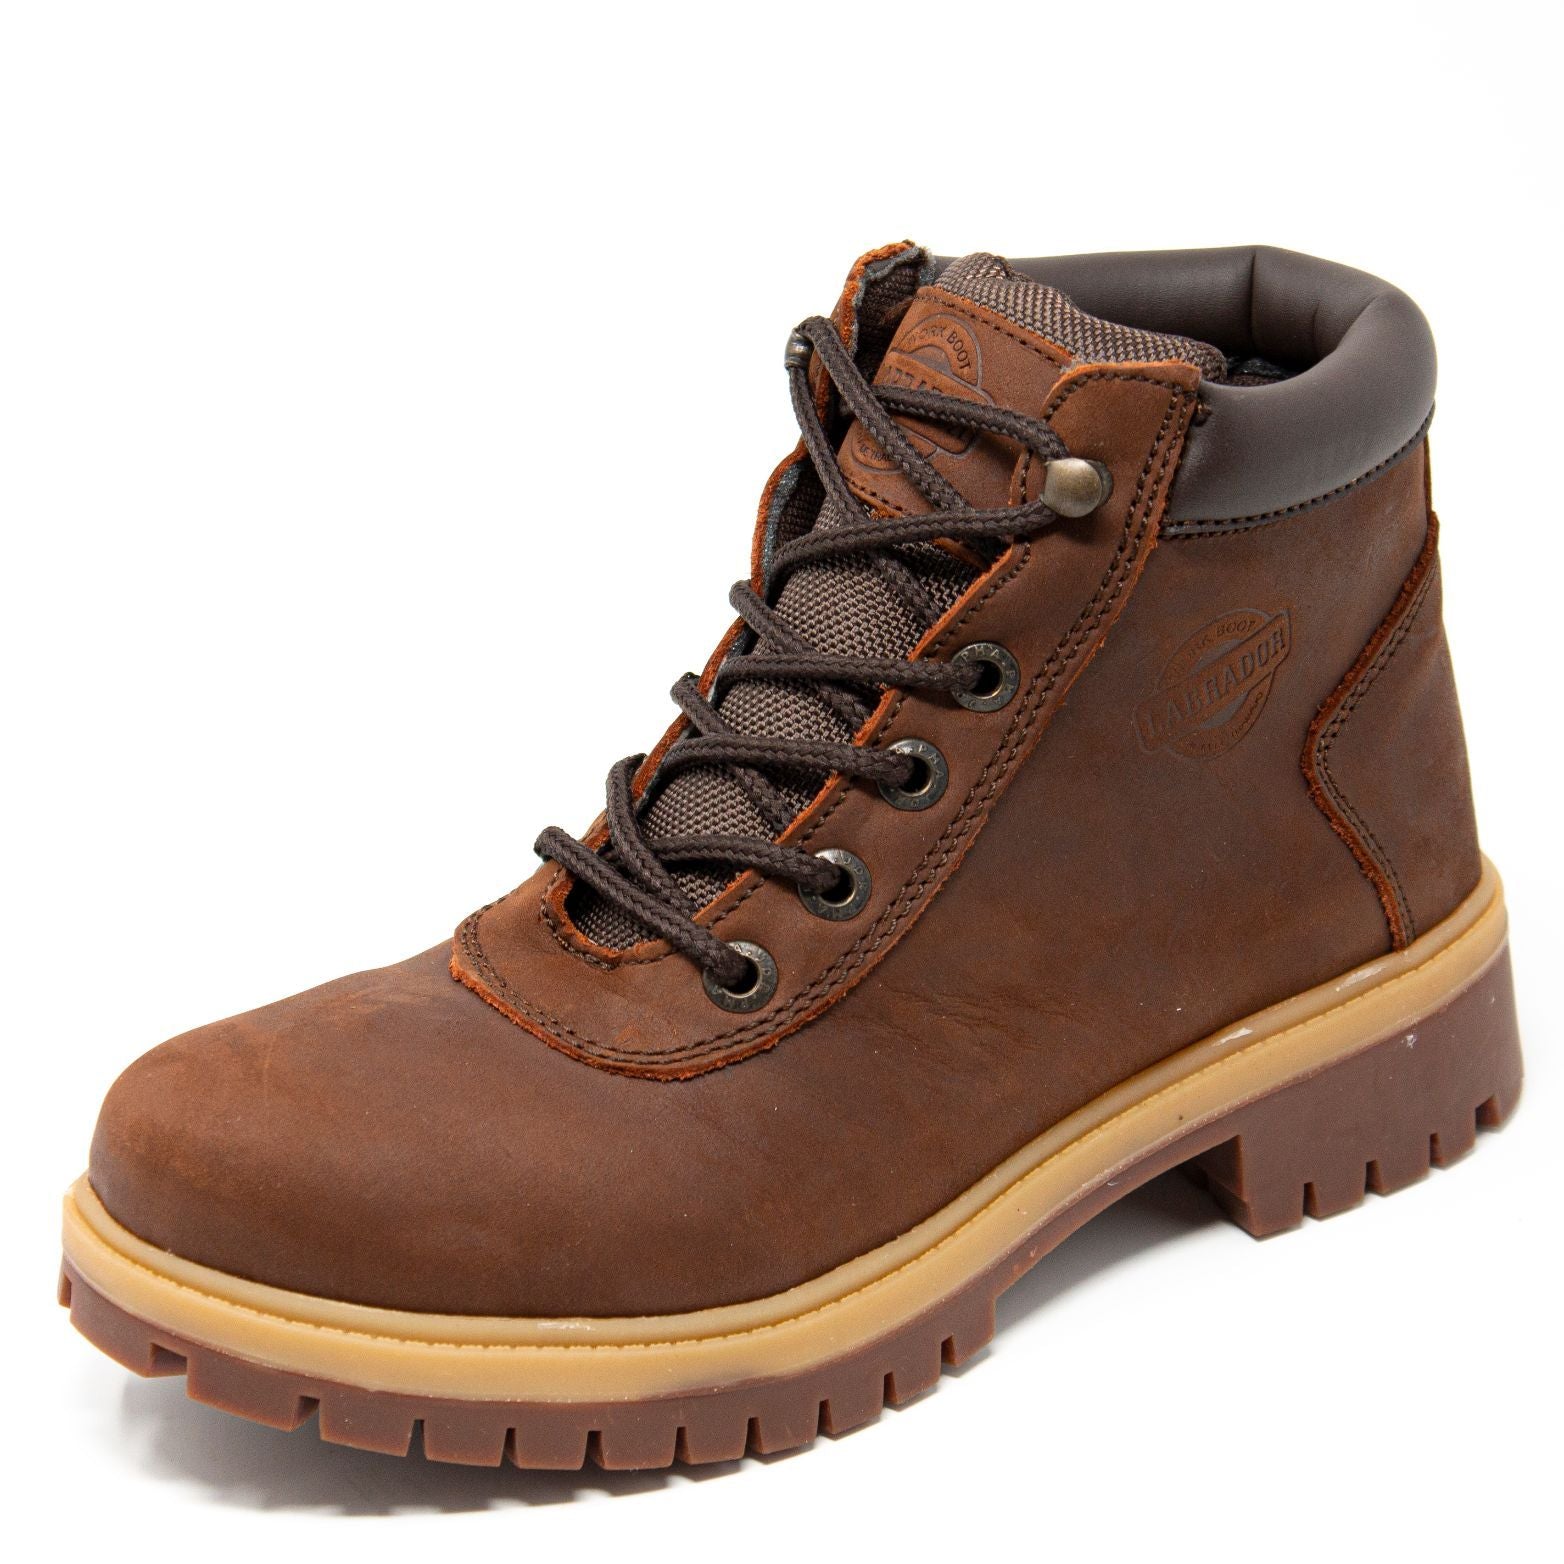 Women's Work Boots - Heavy Duty - Brown Work Boots - Labrador - 6" Work Boots - Copper 6in Work Boots